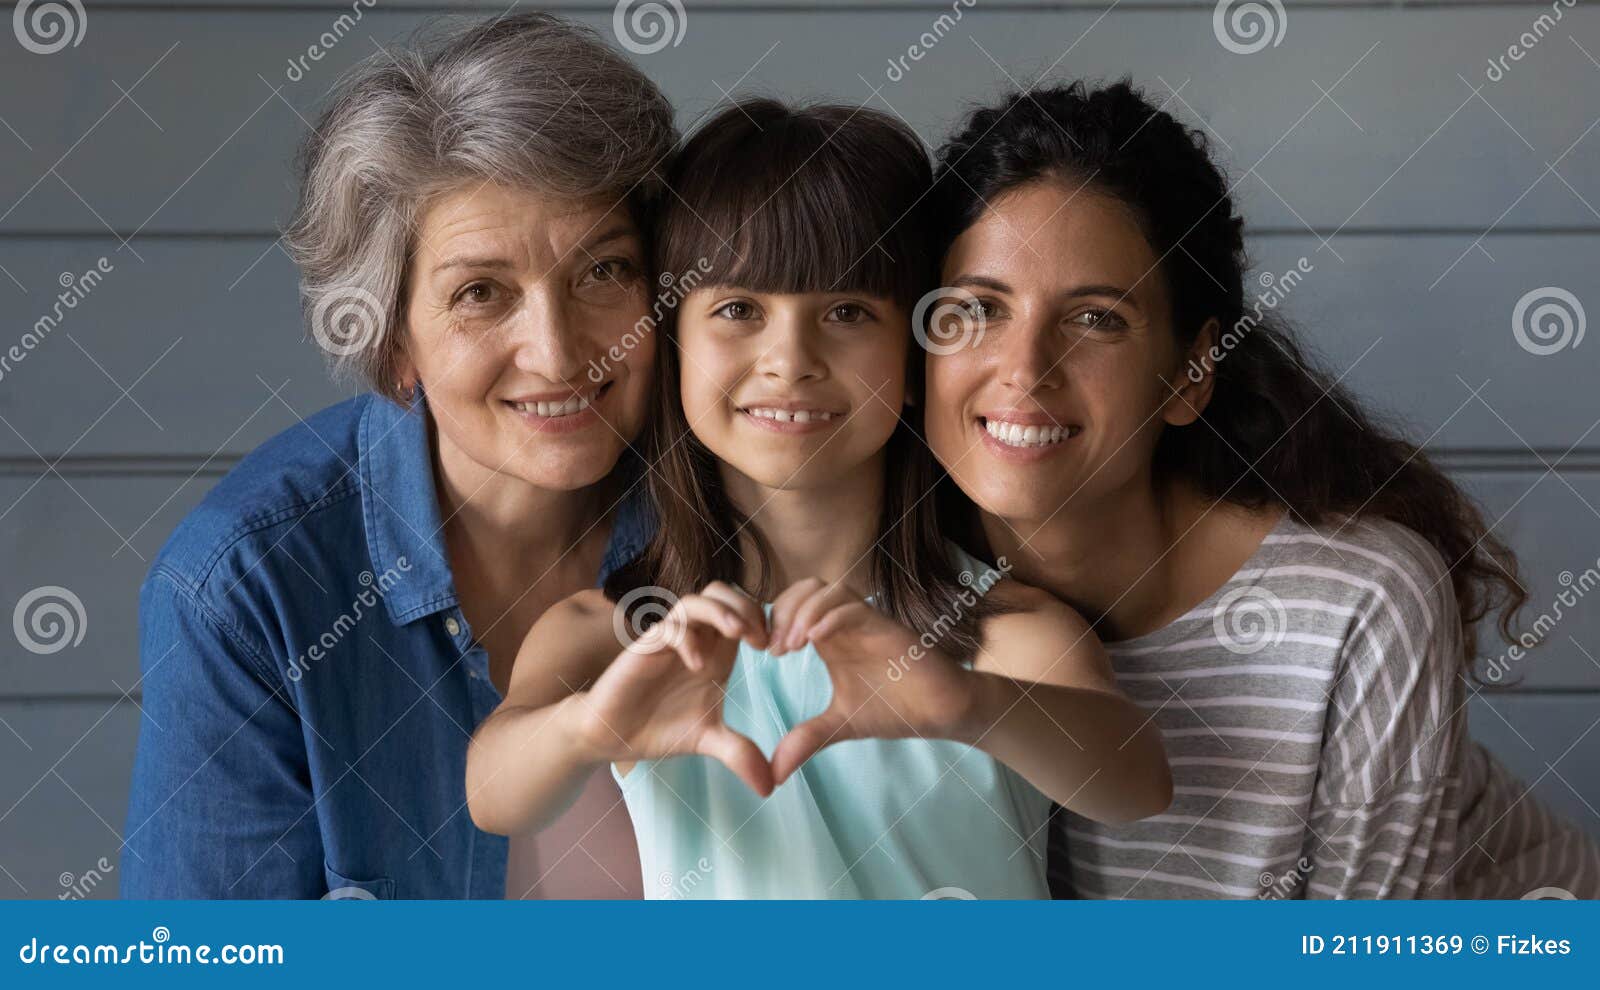 portrait of happy three generations of latino women